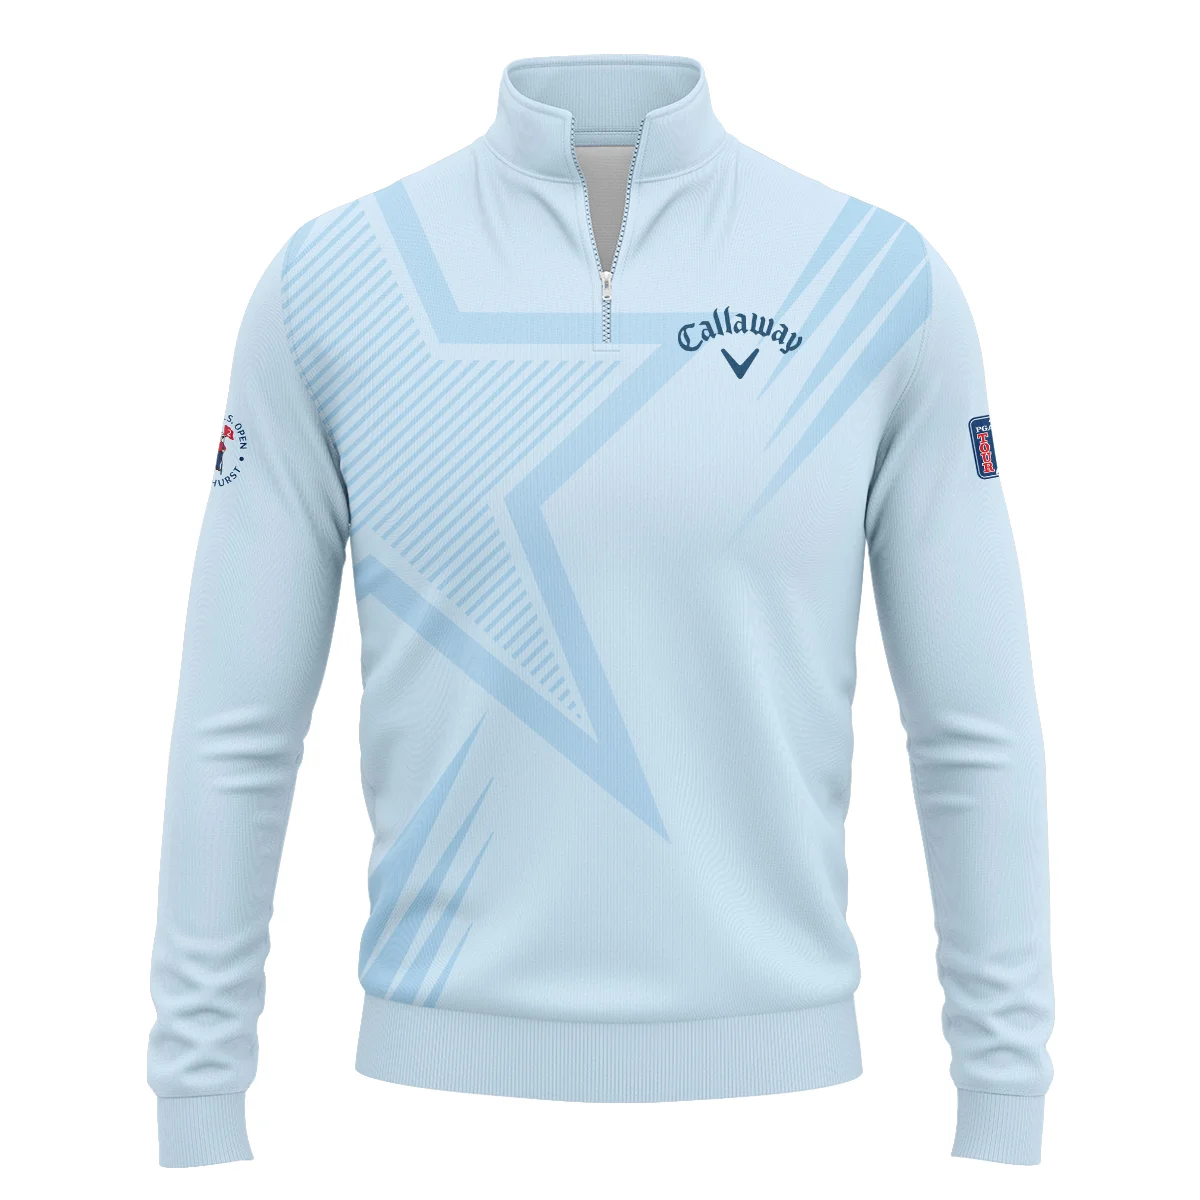 124th U.S. Open Pinehurst Golf Star Line Pattern Light Blue Callaway Polo Shirt Mandarin Collar Polo Shirt